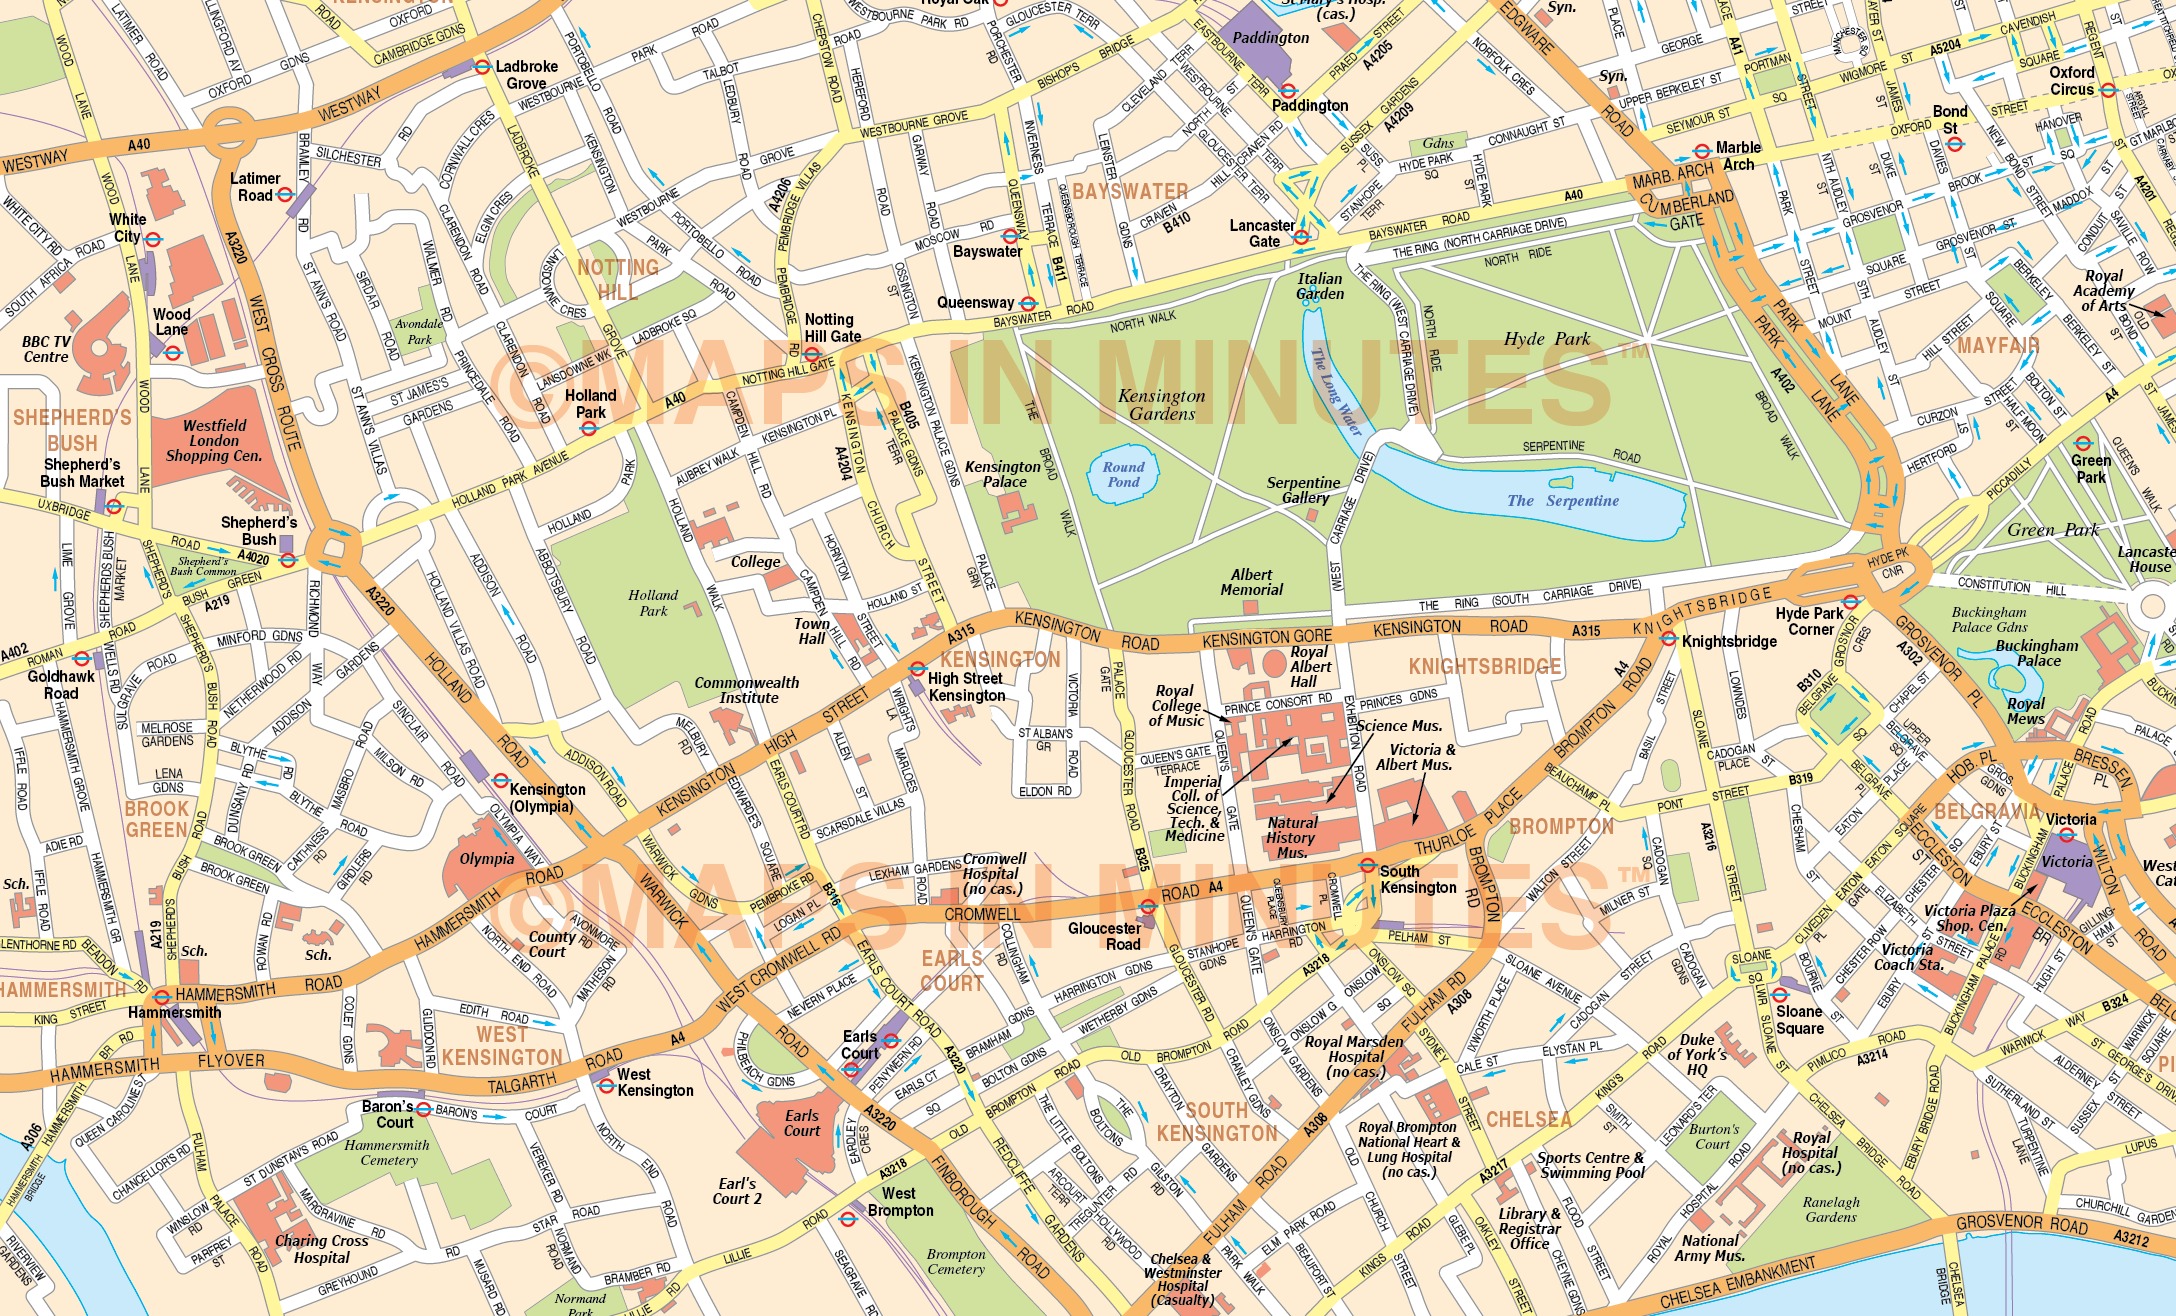 Digital vector map of London in illustrator editable format. Royalty free.